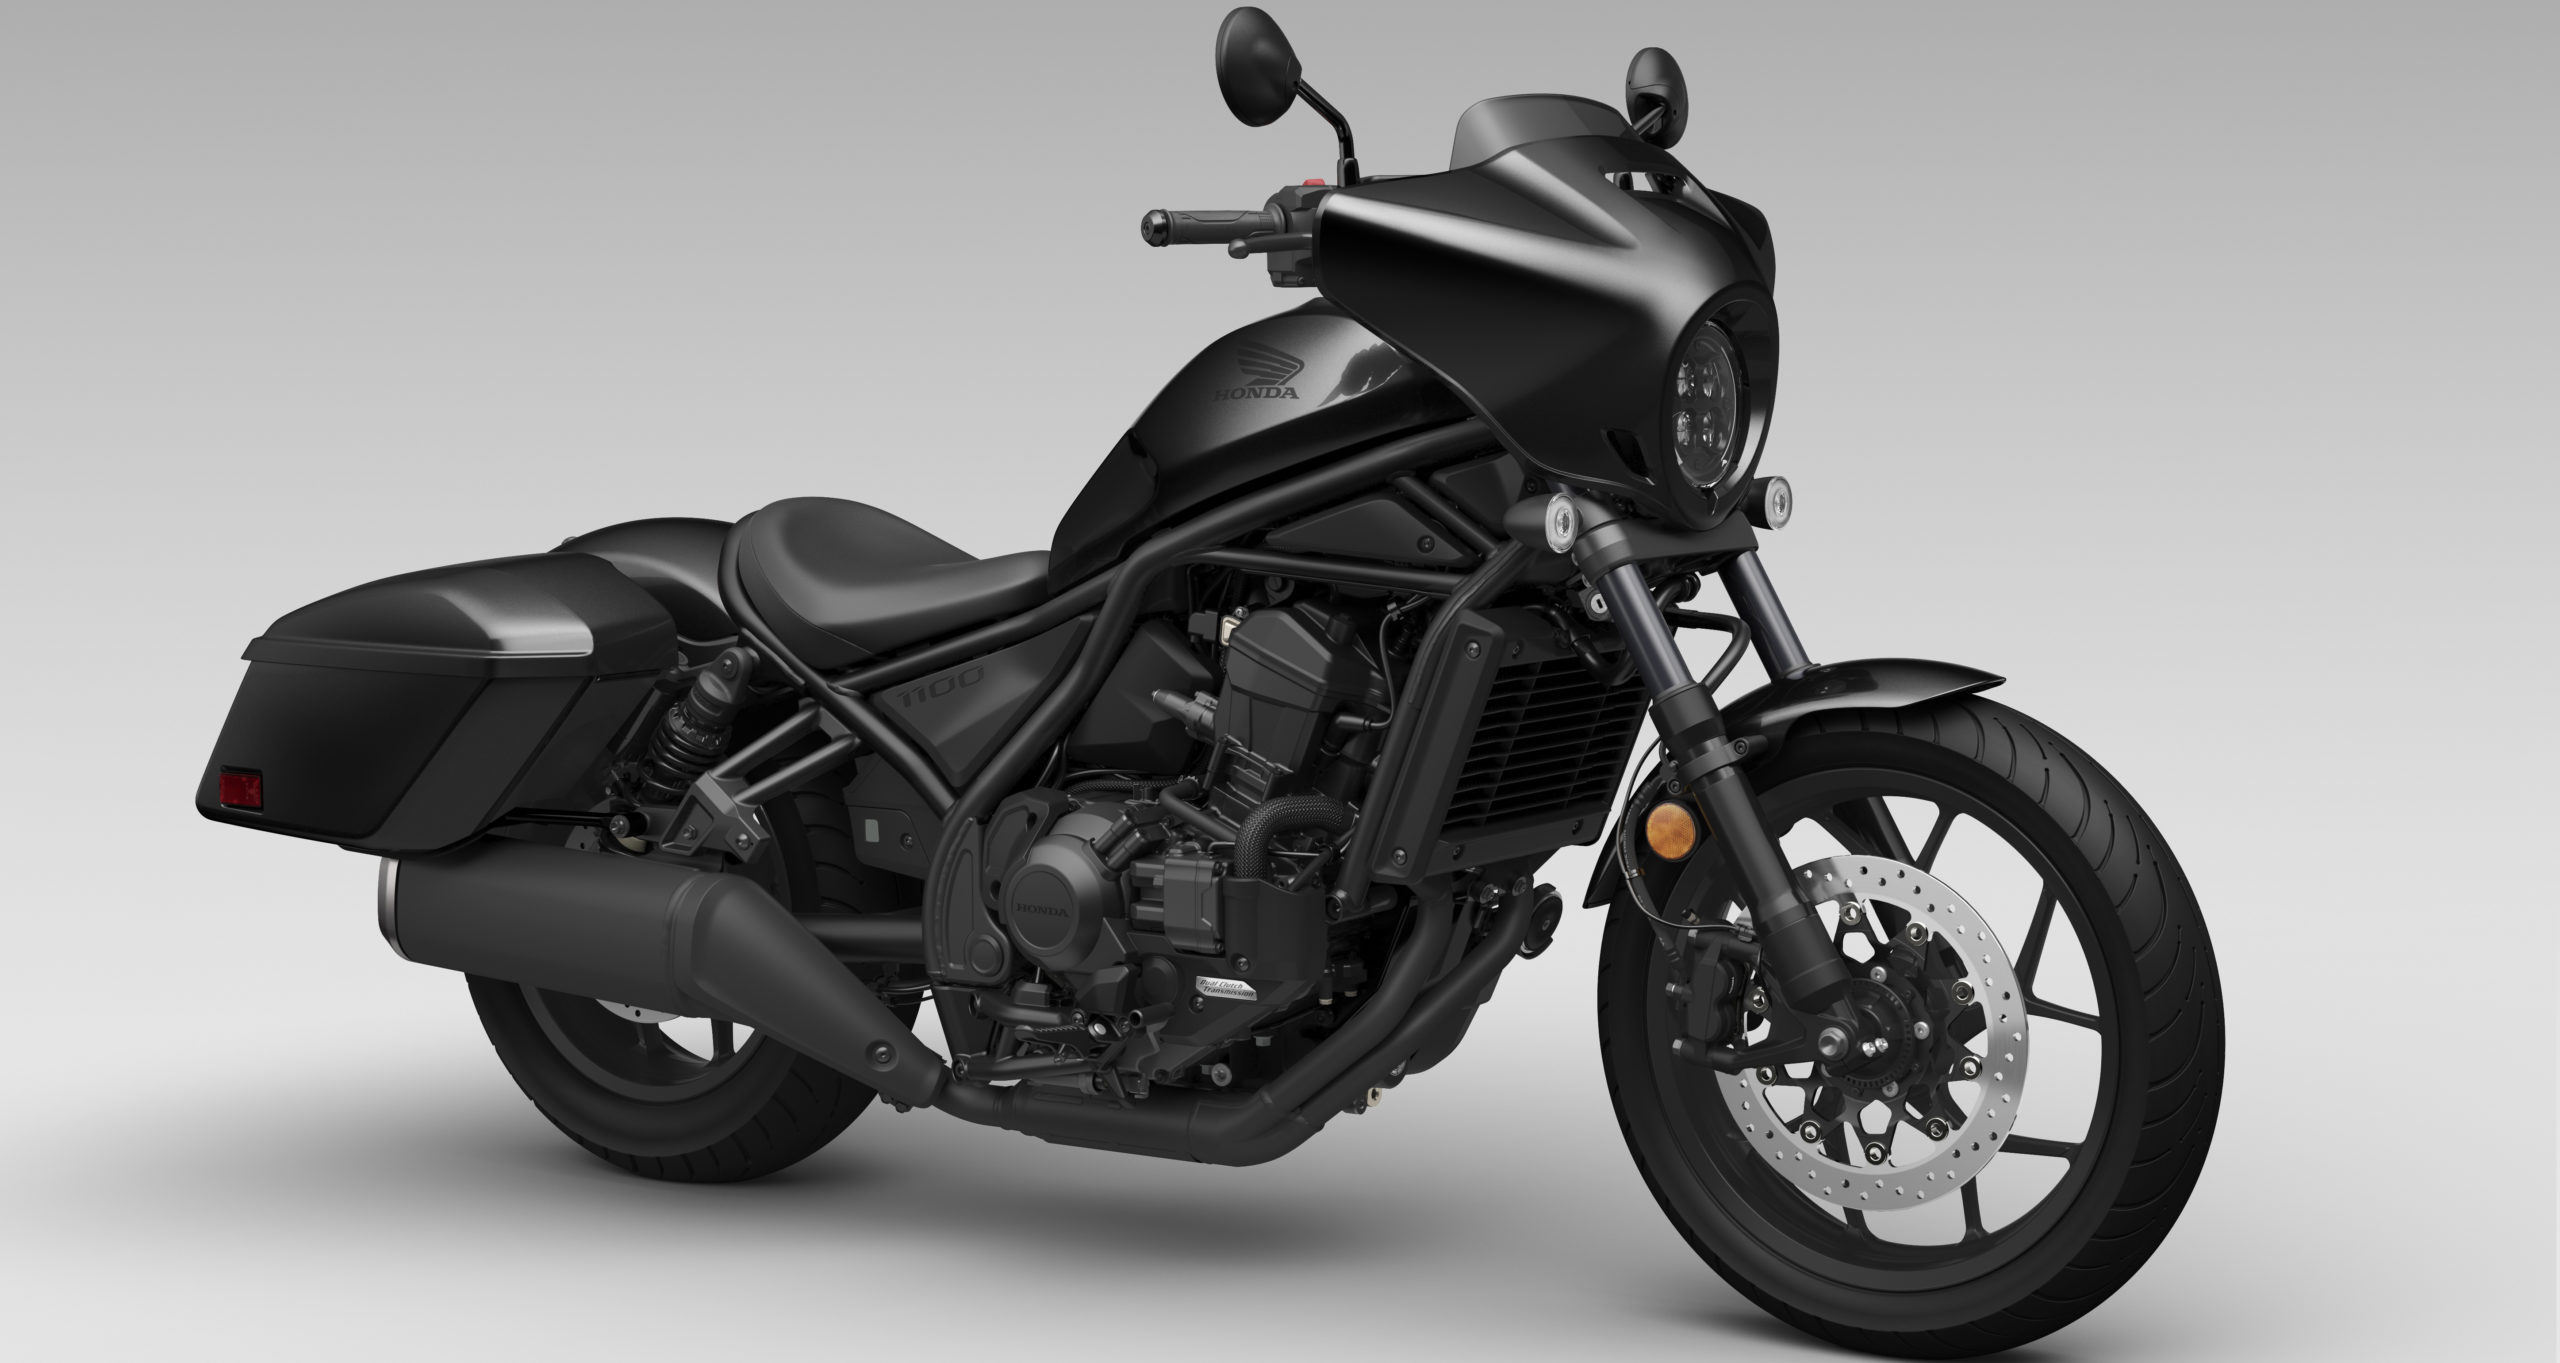 Honda unveils 2023 returning motorcycle models, new “Bagger” Rebel